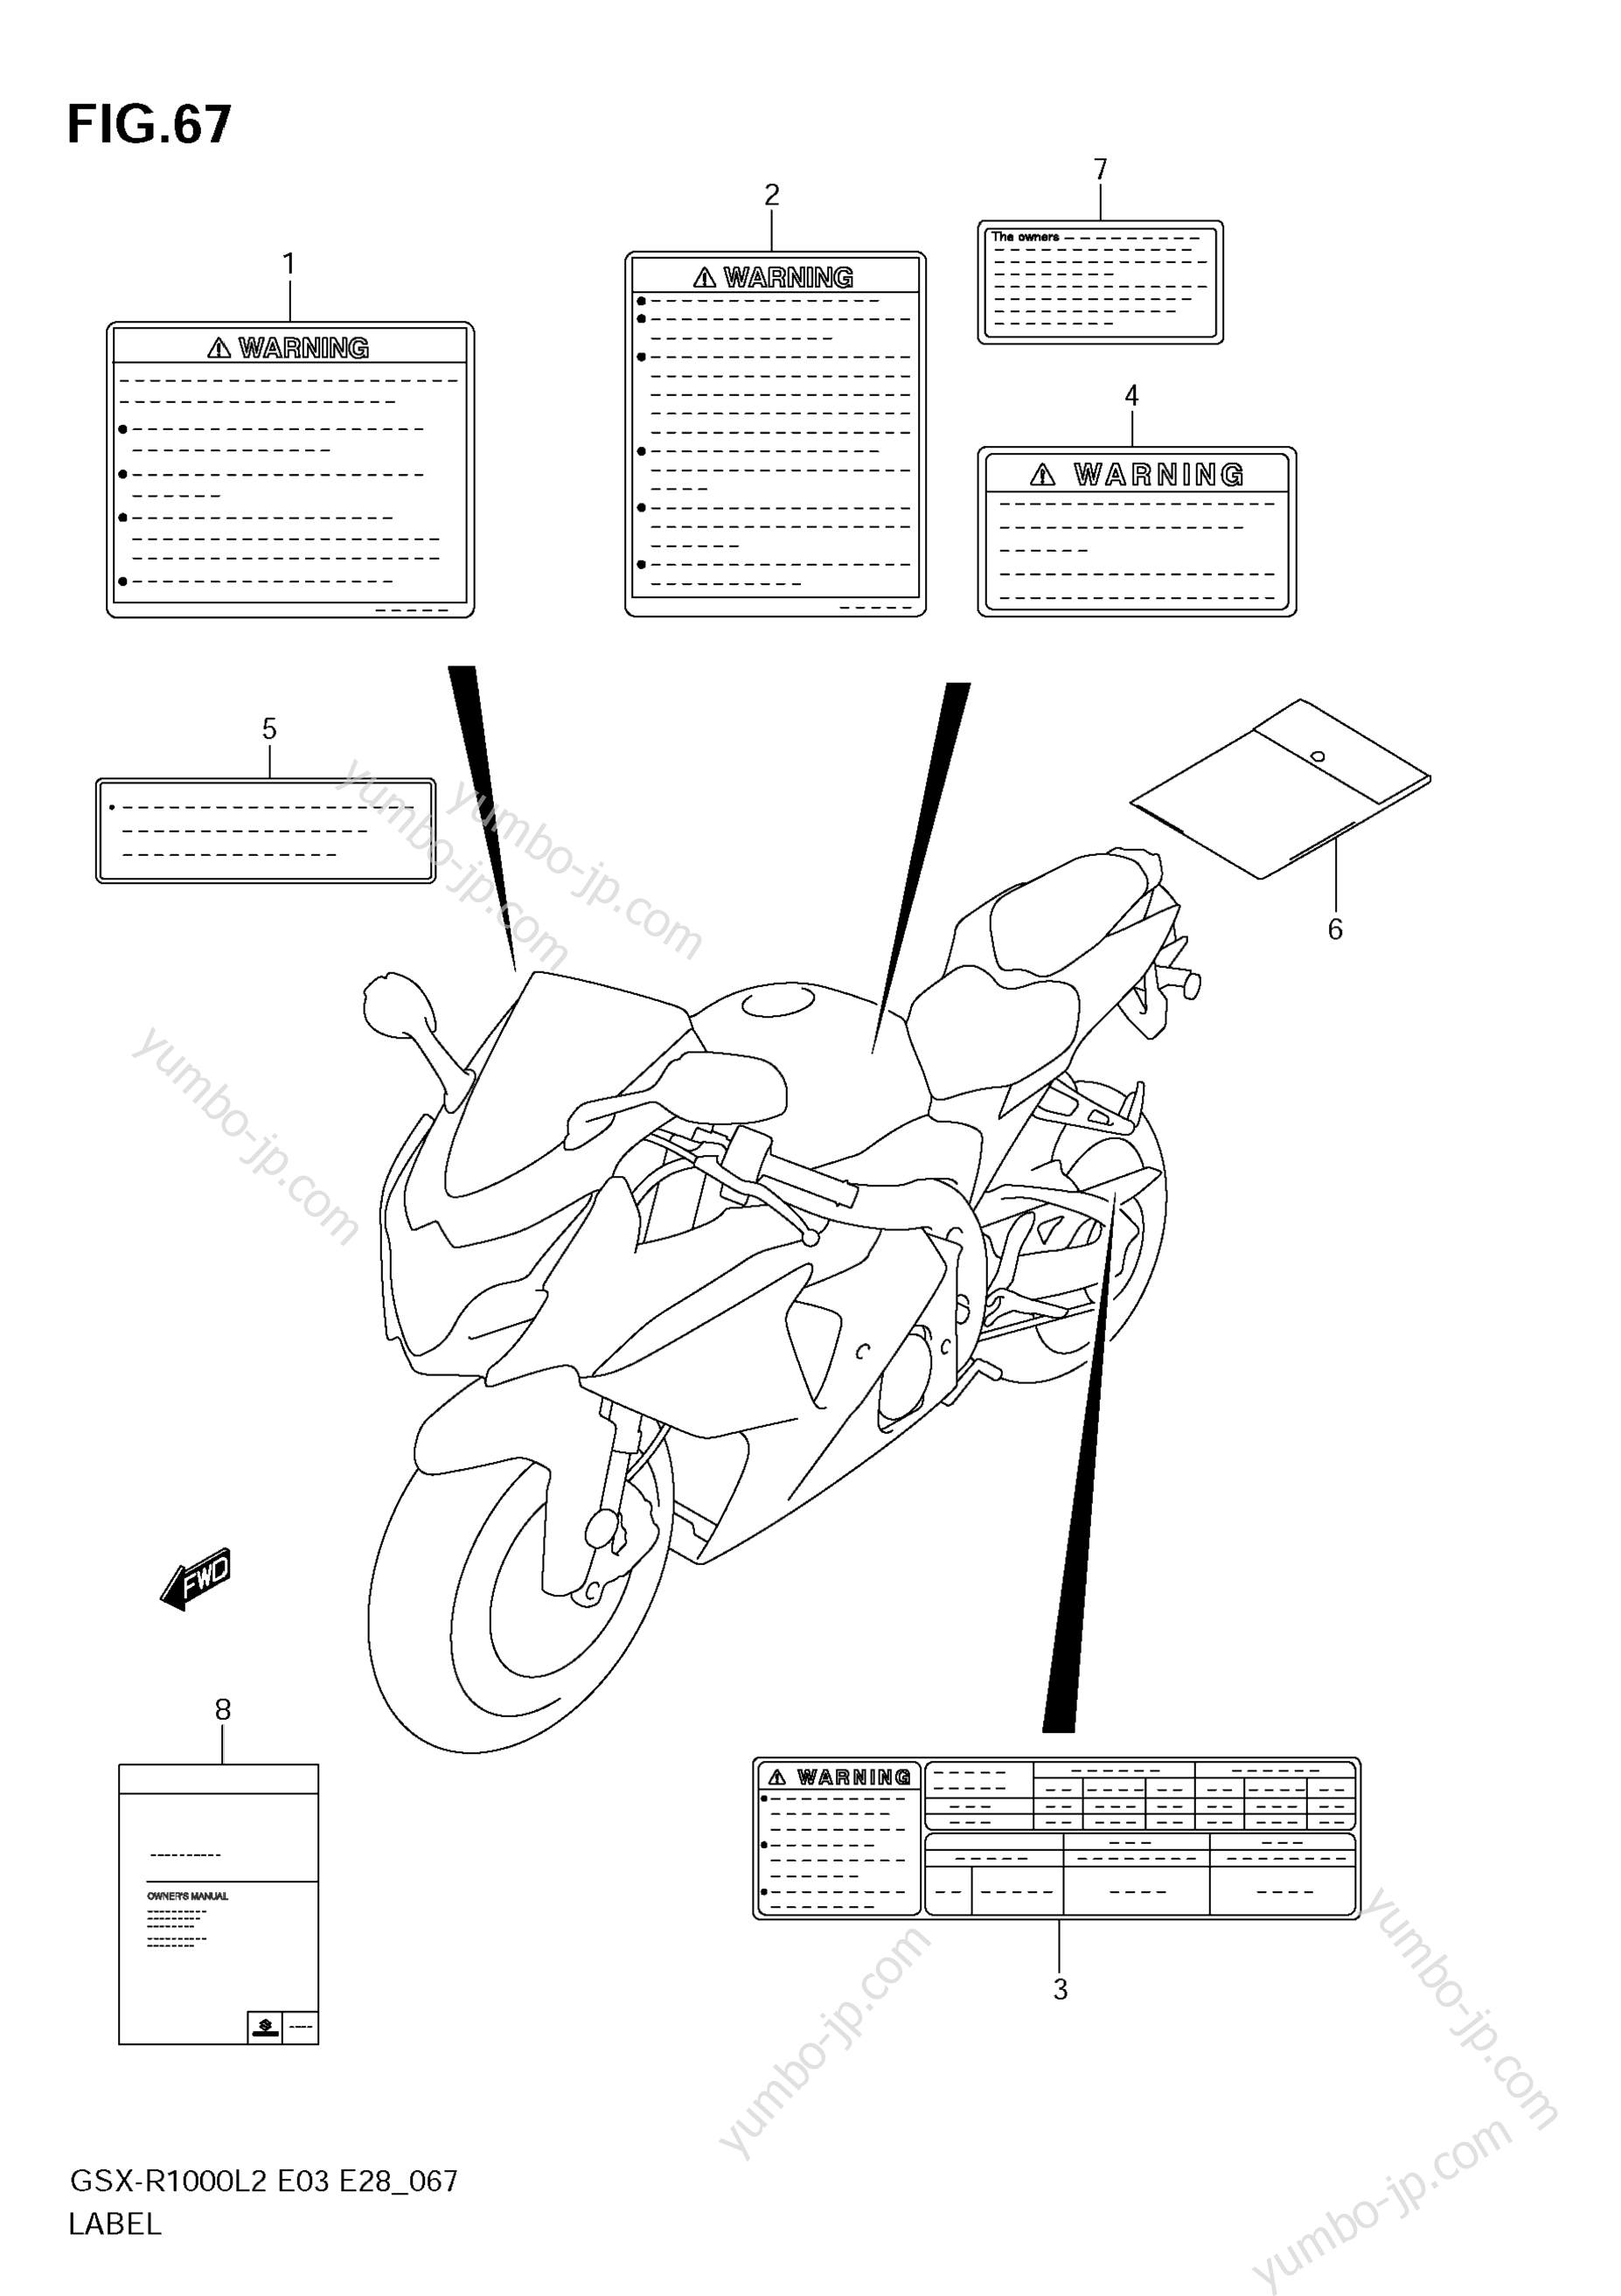 LABEL (GSX-R1000 L2 E03) for motorcycles SUZUKI GSX-R1000 2012 year